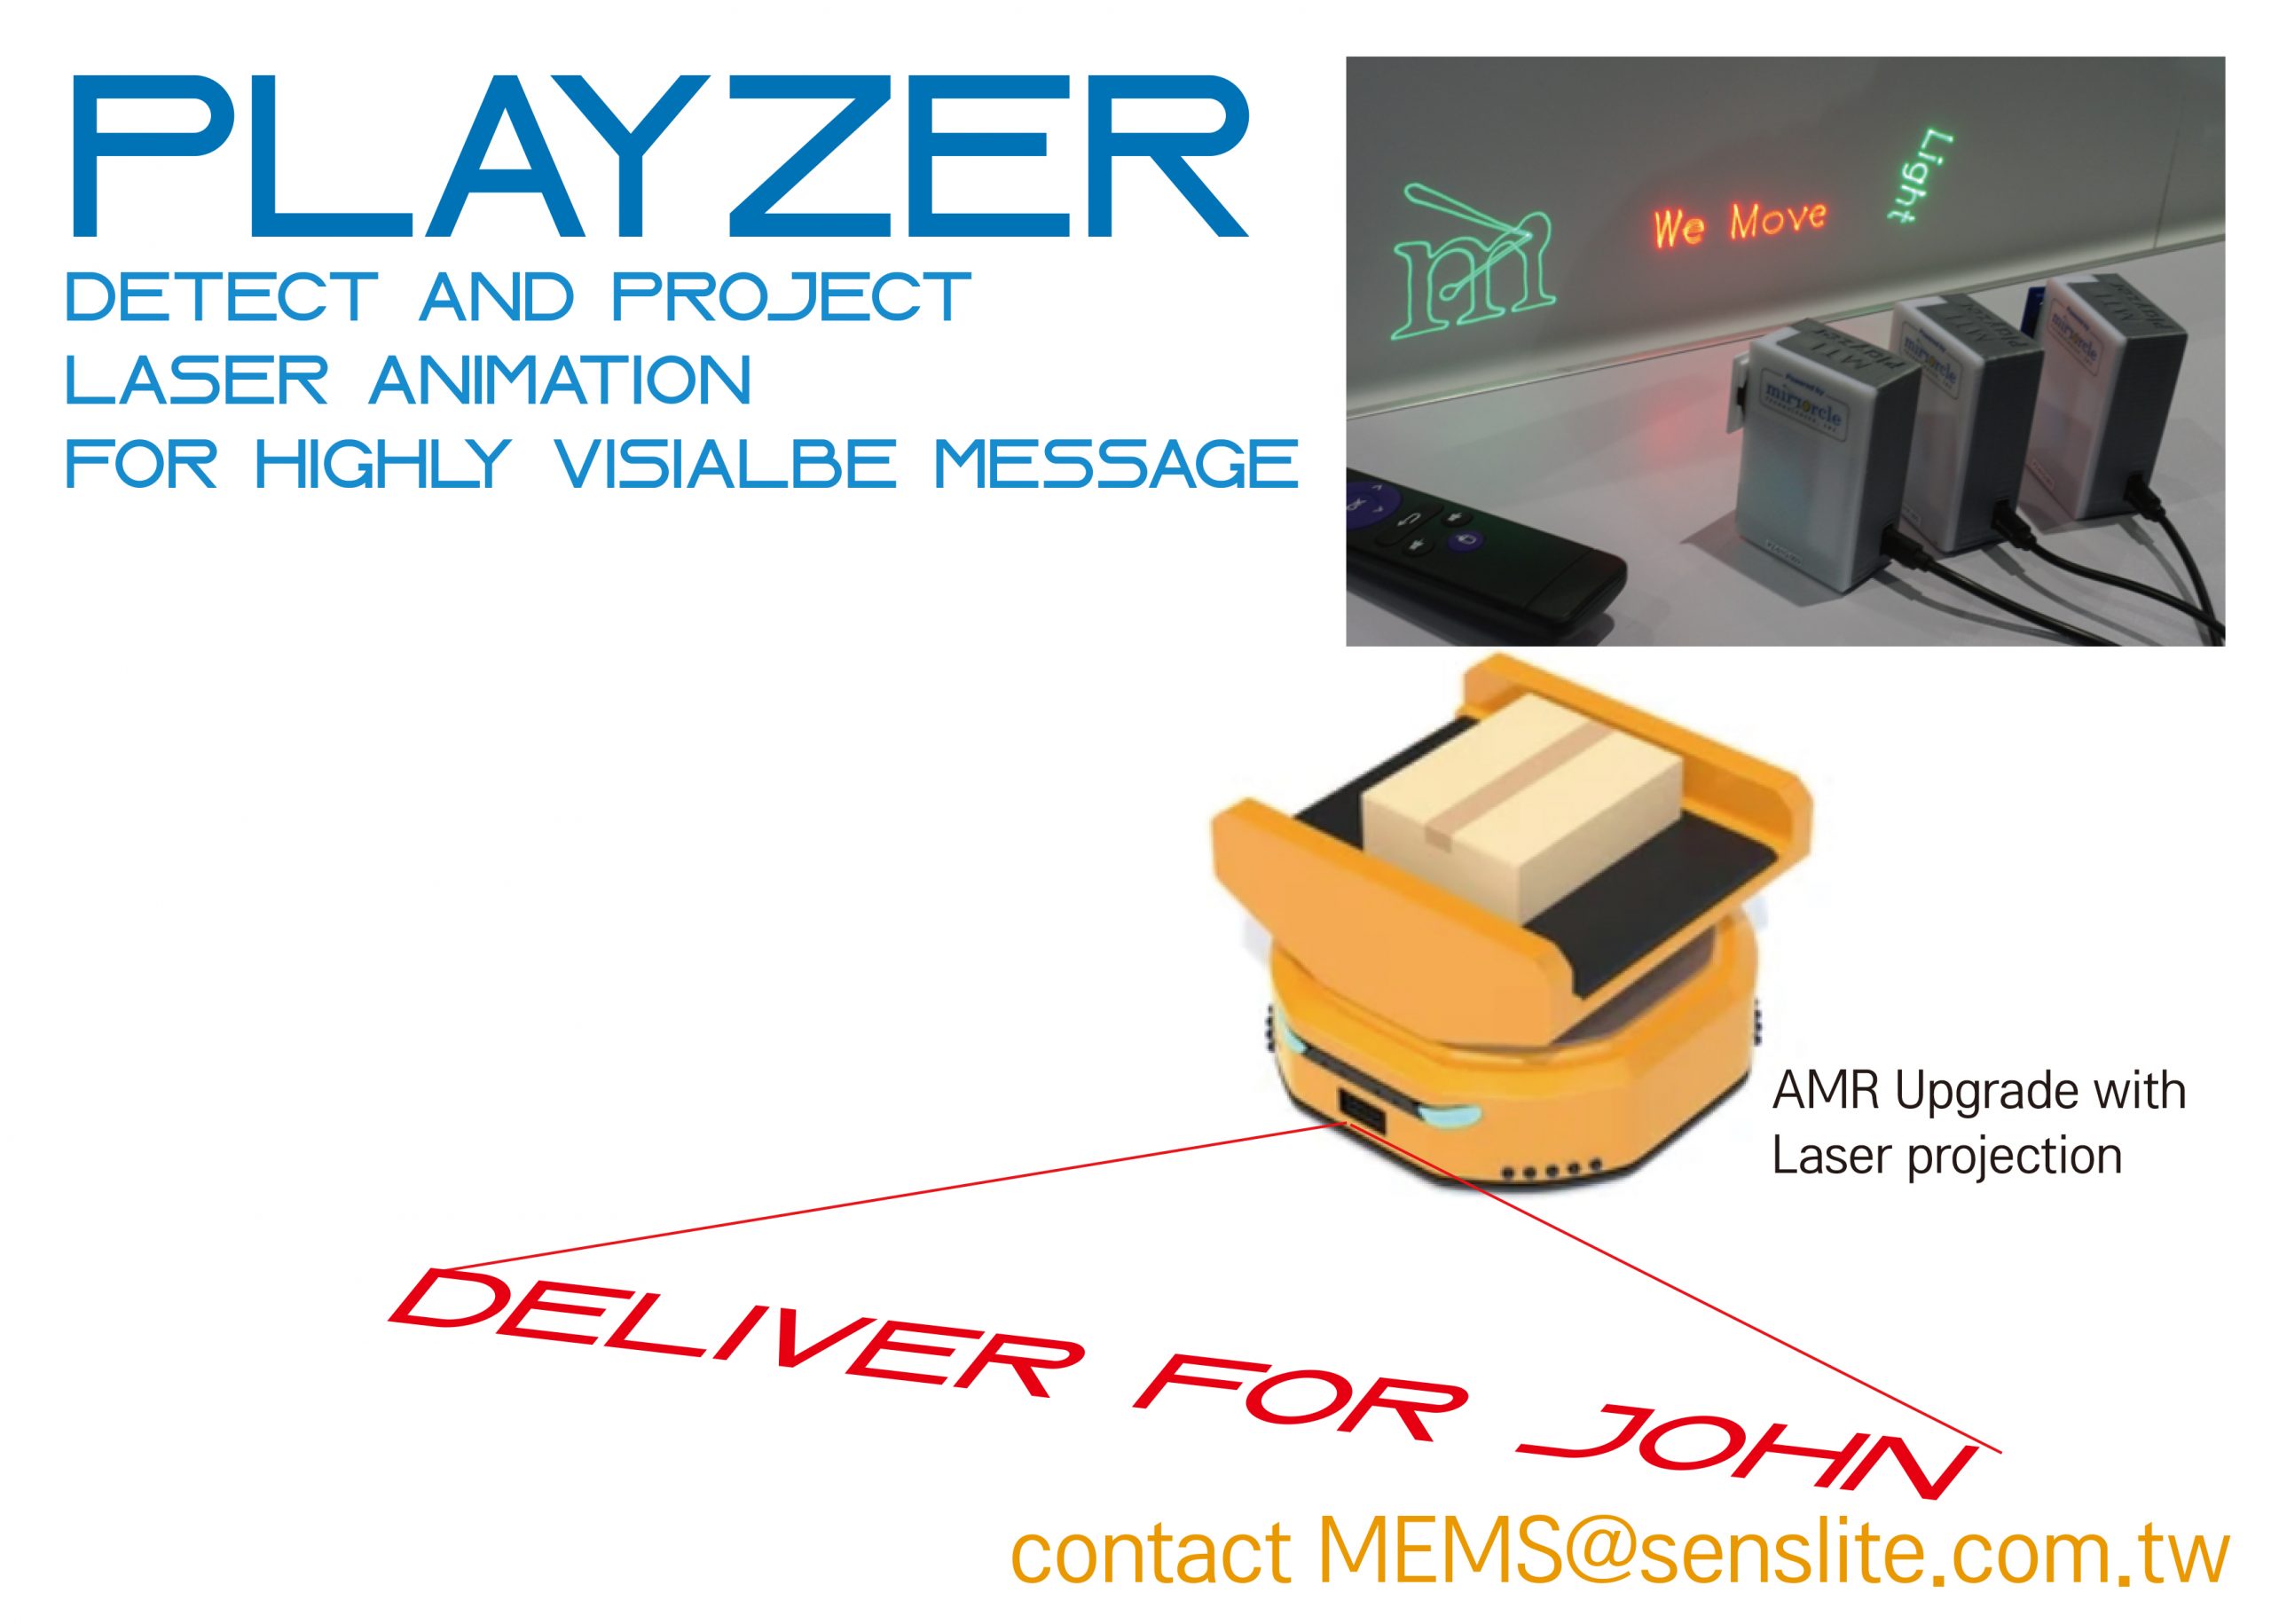 Playzer for AMR or AGV application